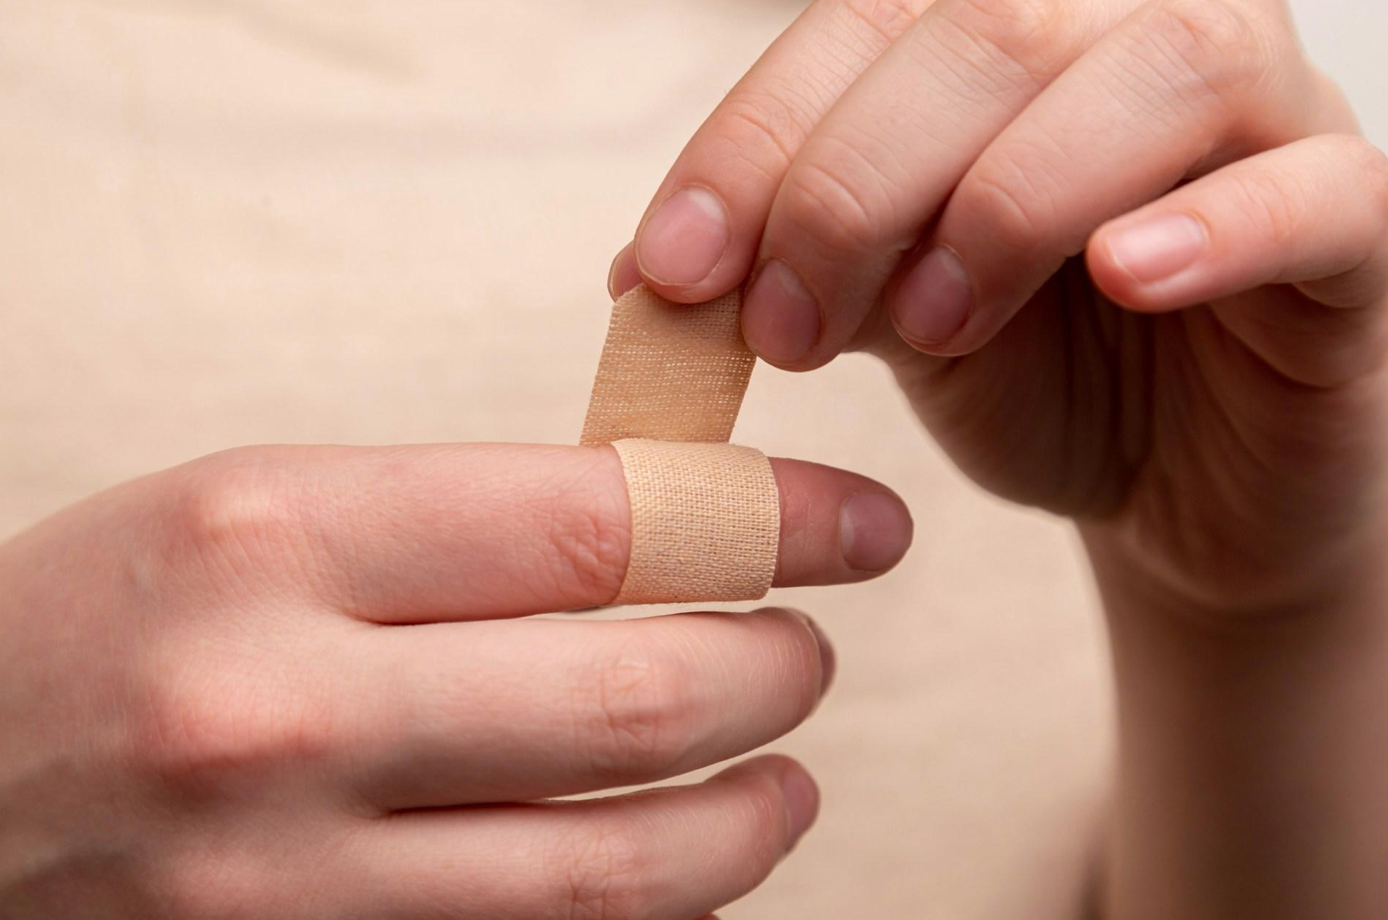 Person putting a bandage on their finger; image by Diana Polekhina, via Unsplash.com.